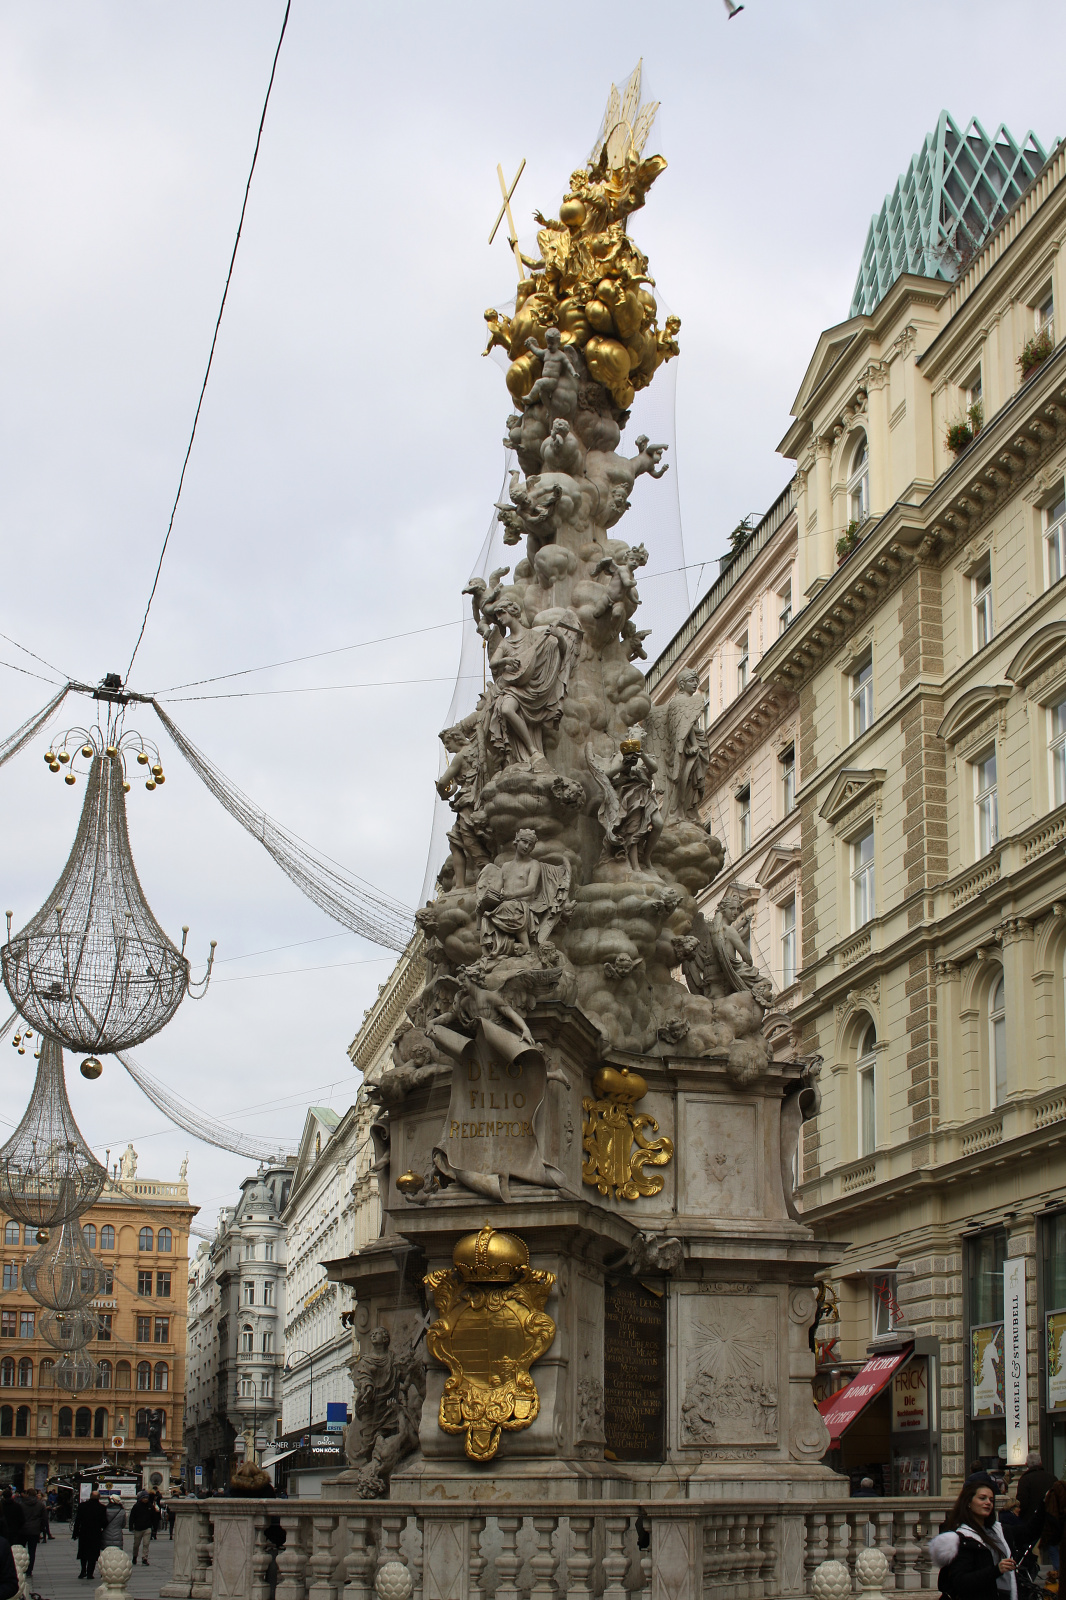 Pestsäule - Plague Column (Travels » Vienna)